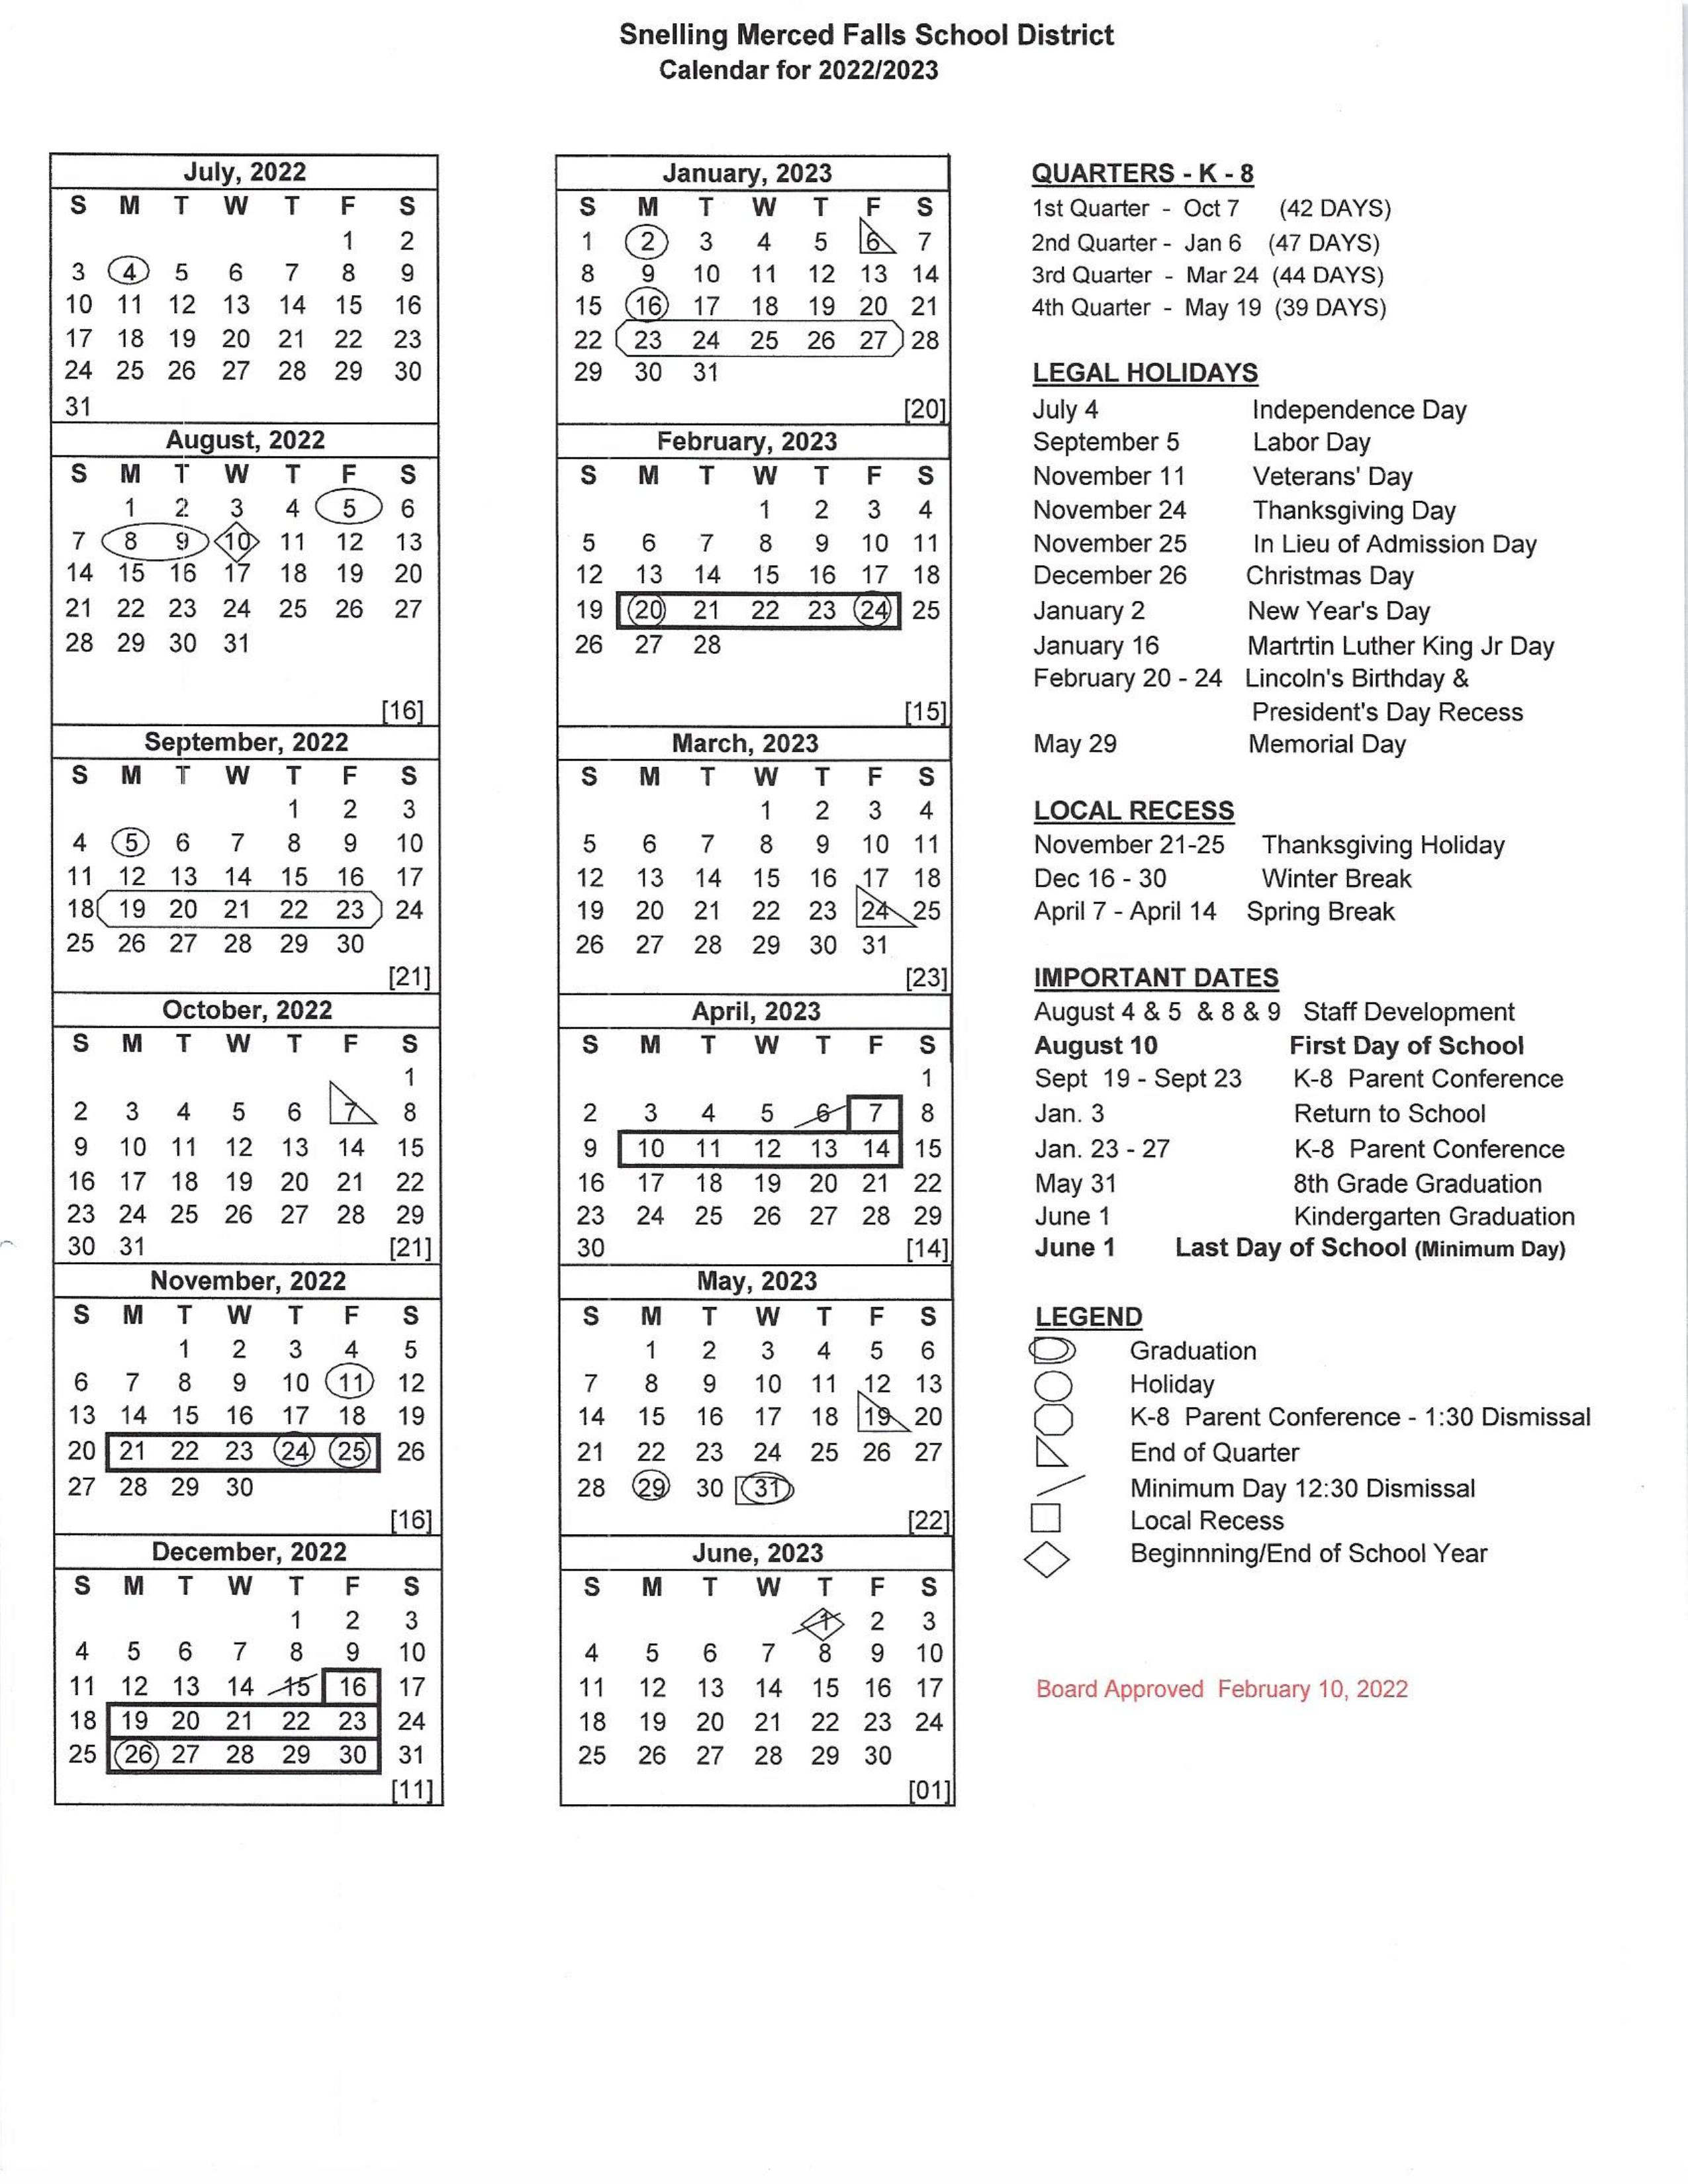 SnellingMerced Falls Union Elementary School District Calendar 20242025